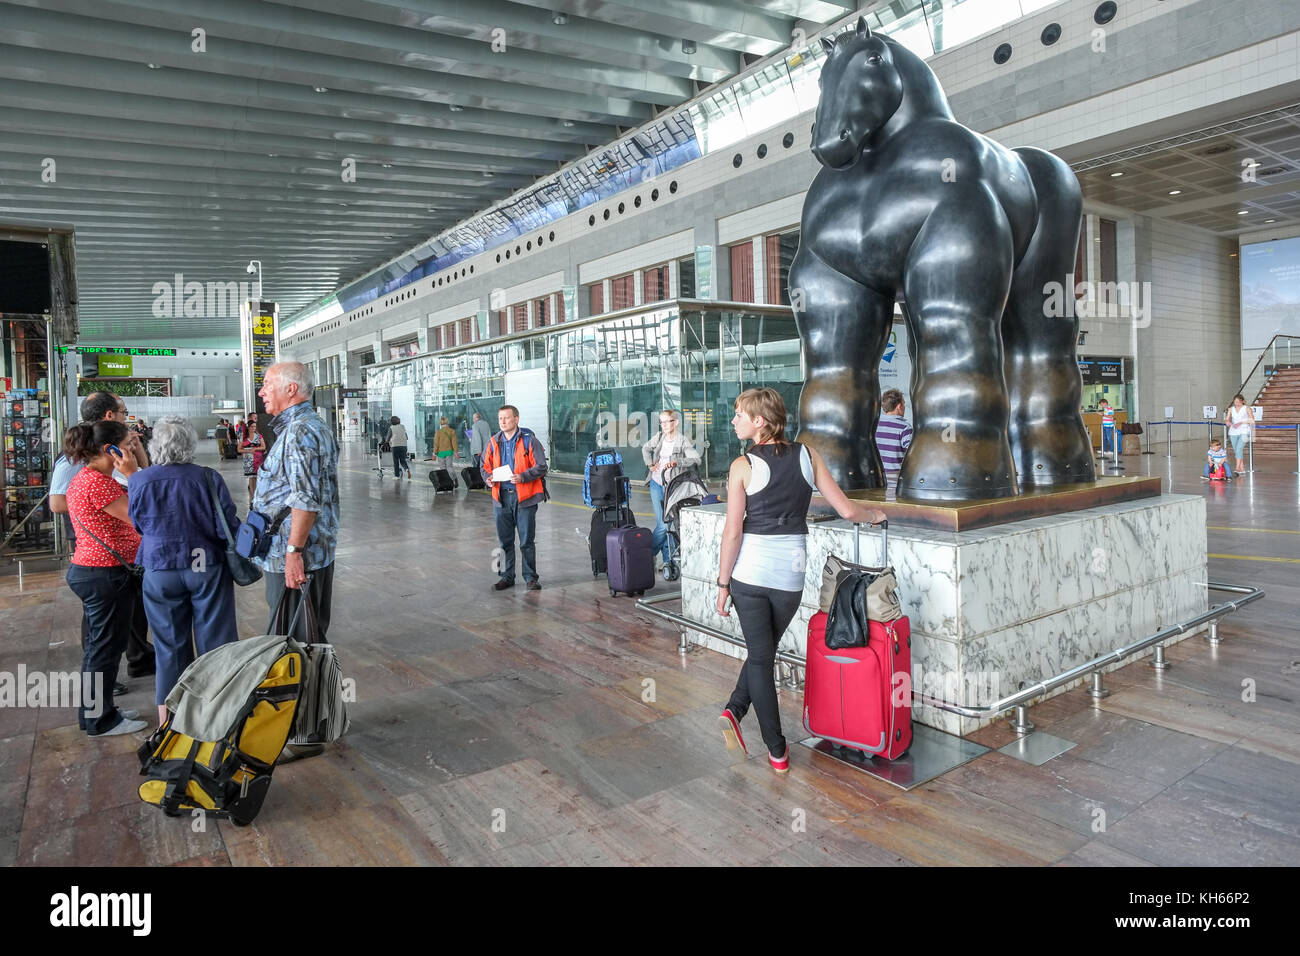 Black horse sculpture at Barcelona Airport El Prat departure hall Stock Photo